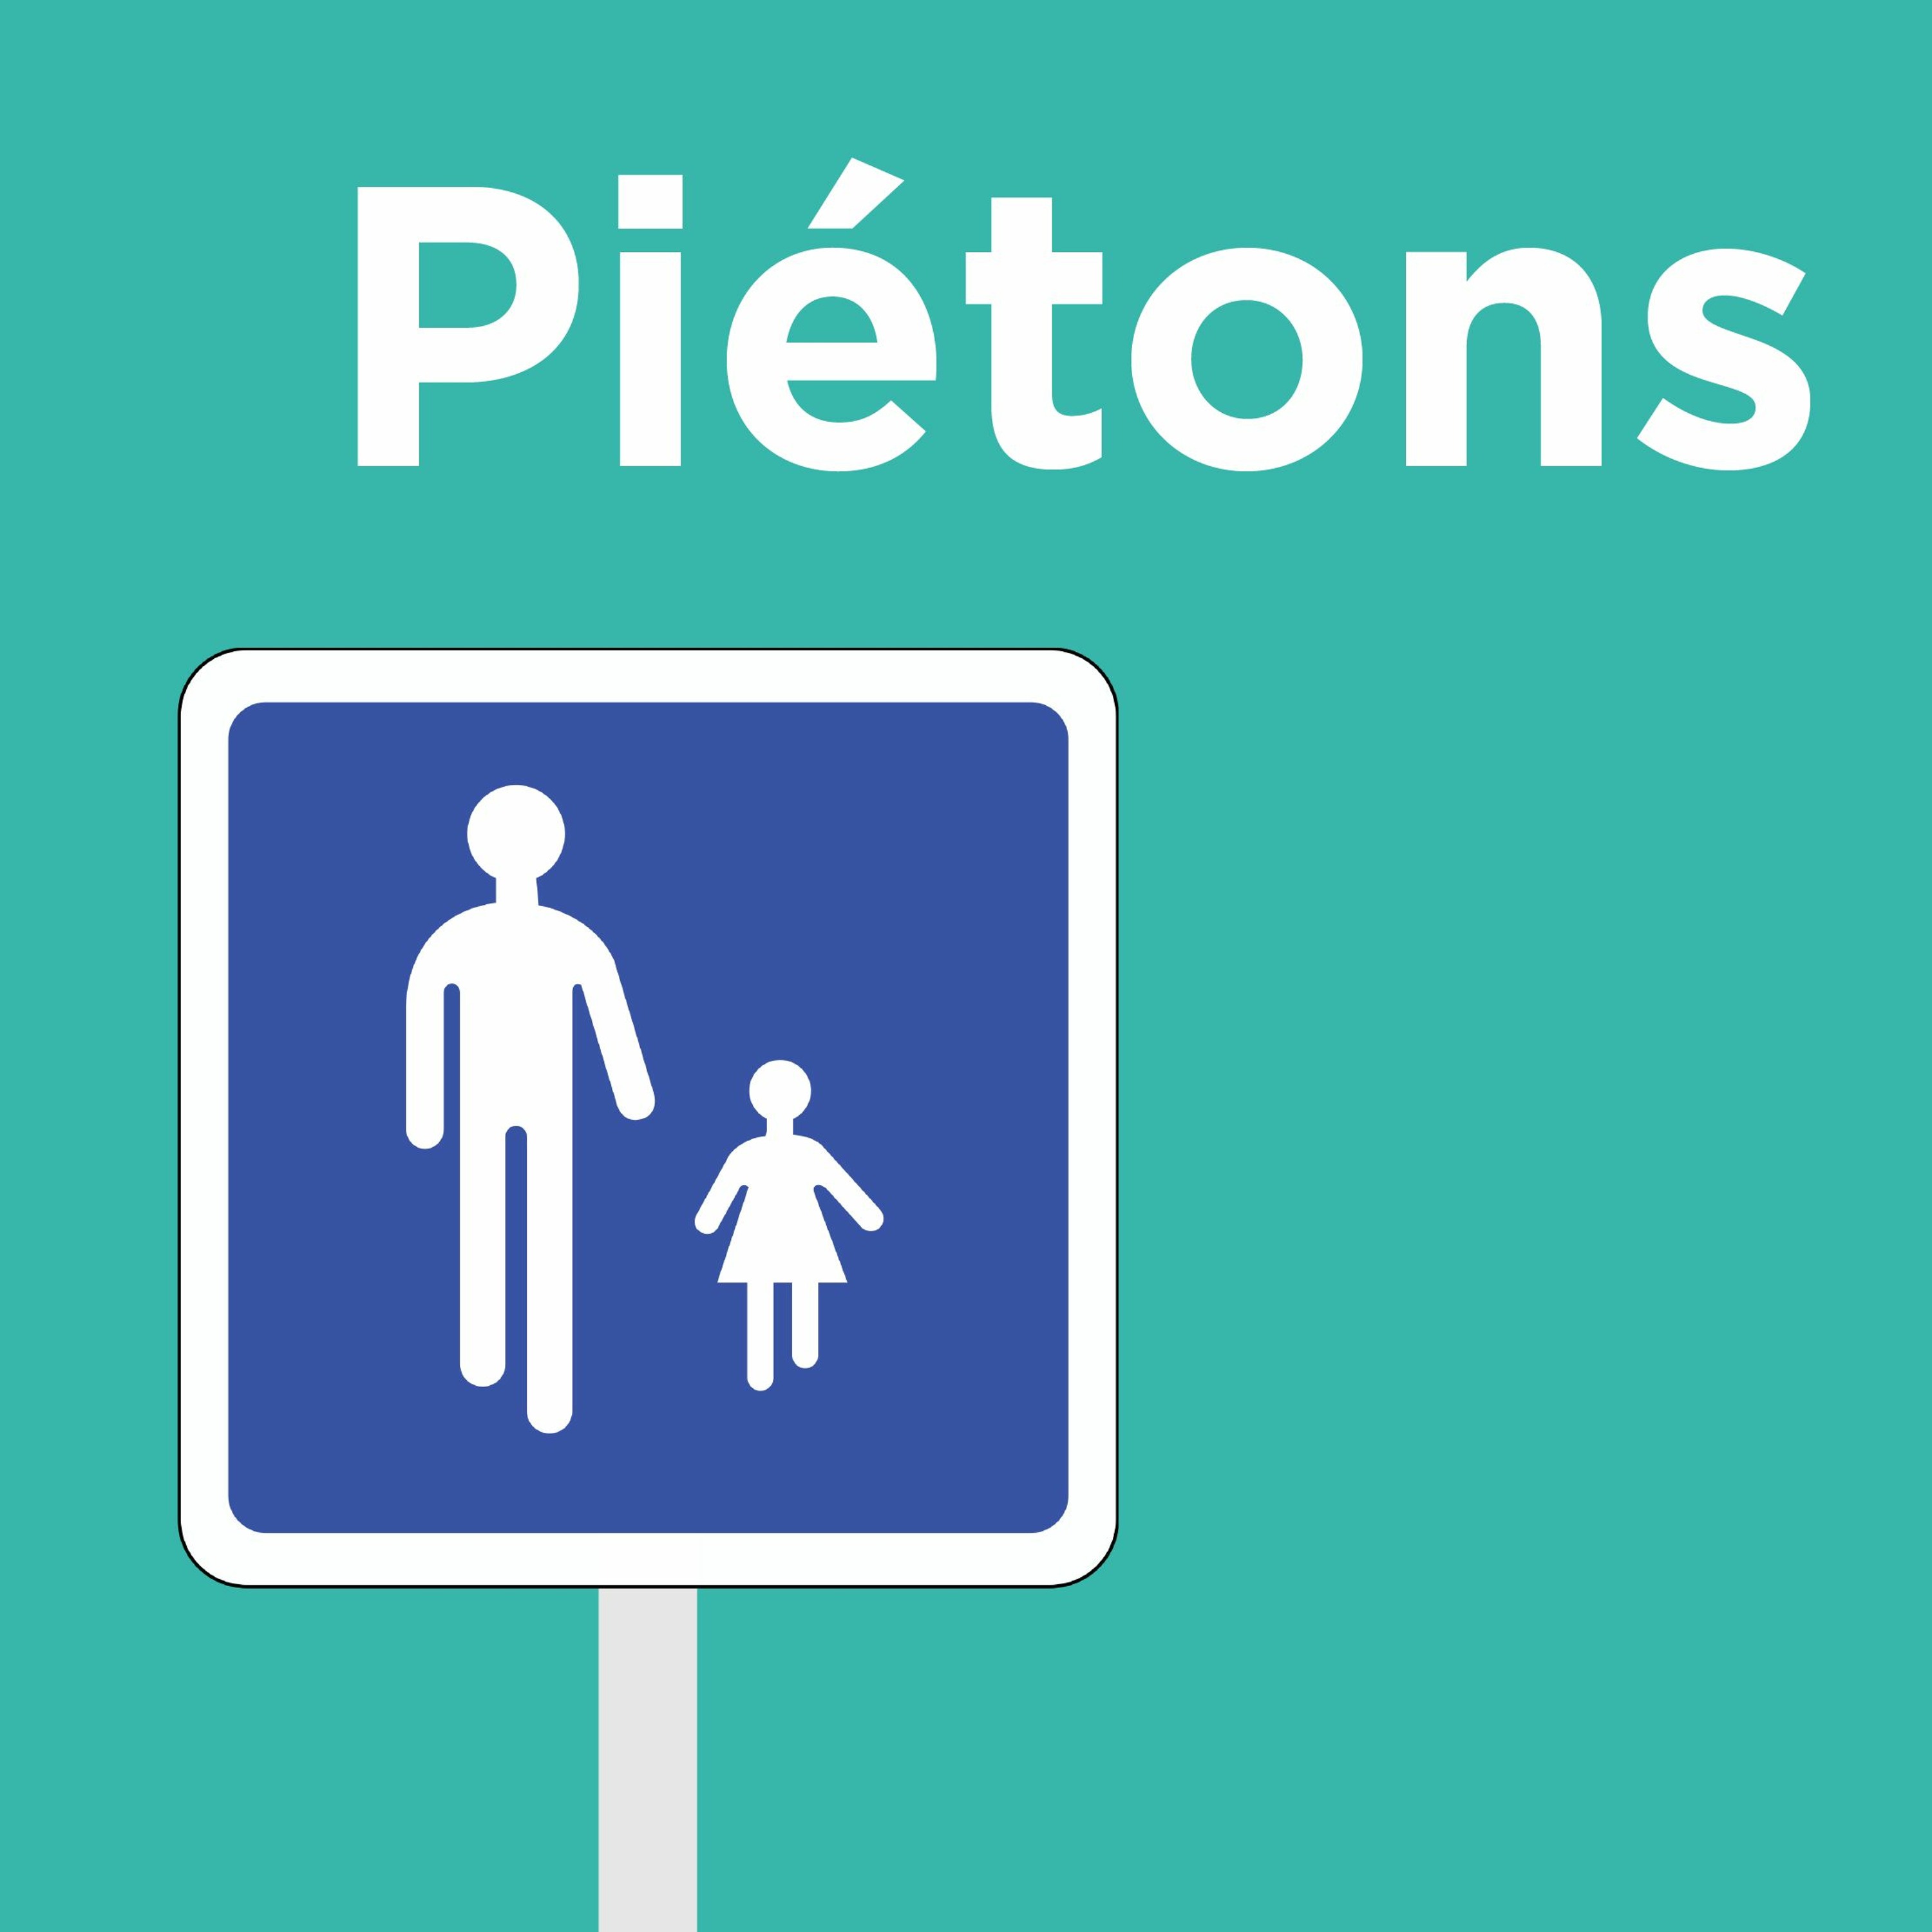 Programme - Piétons